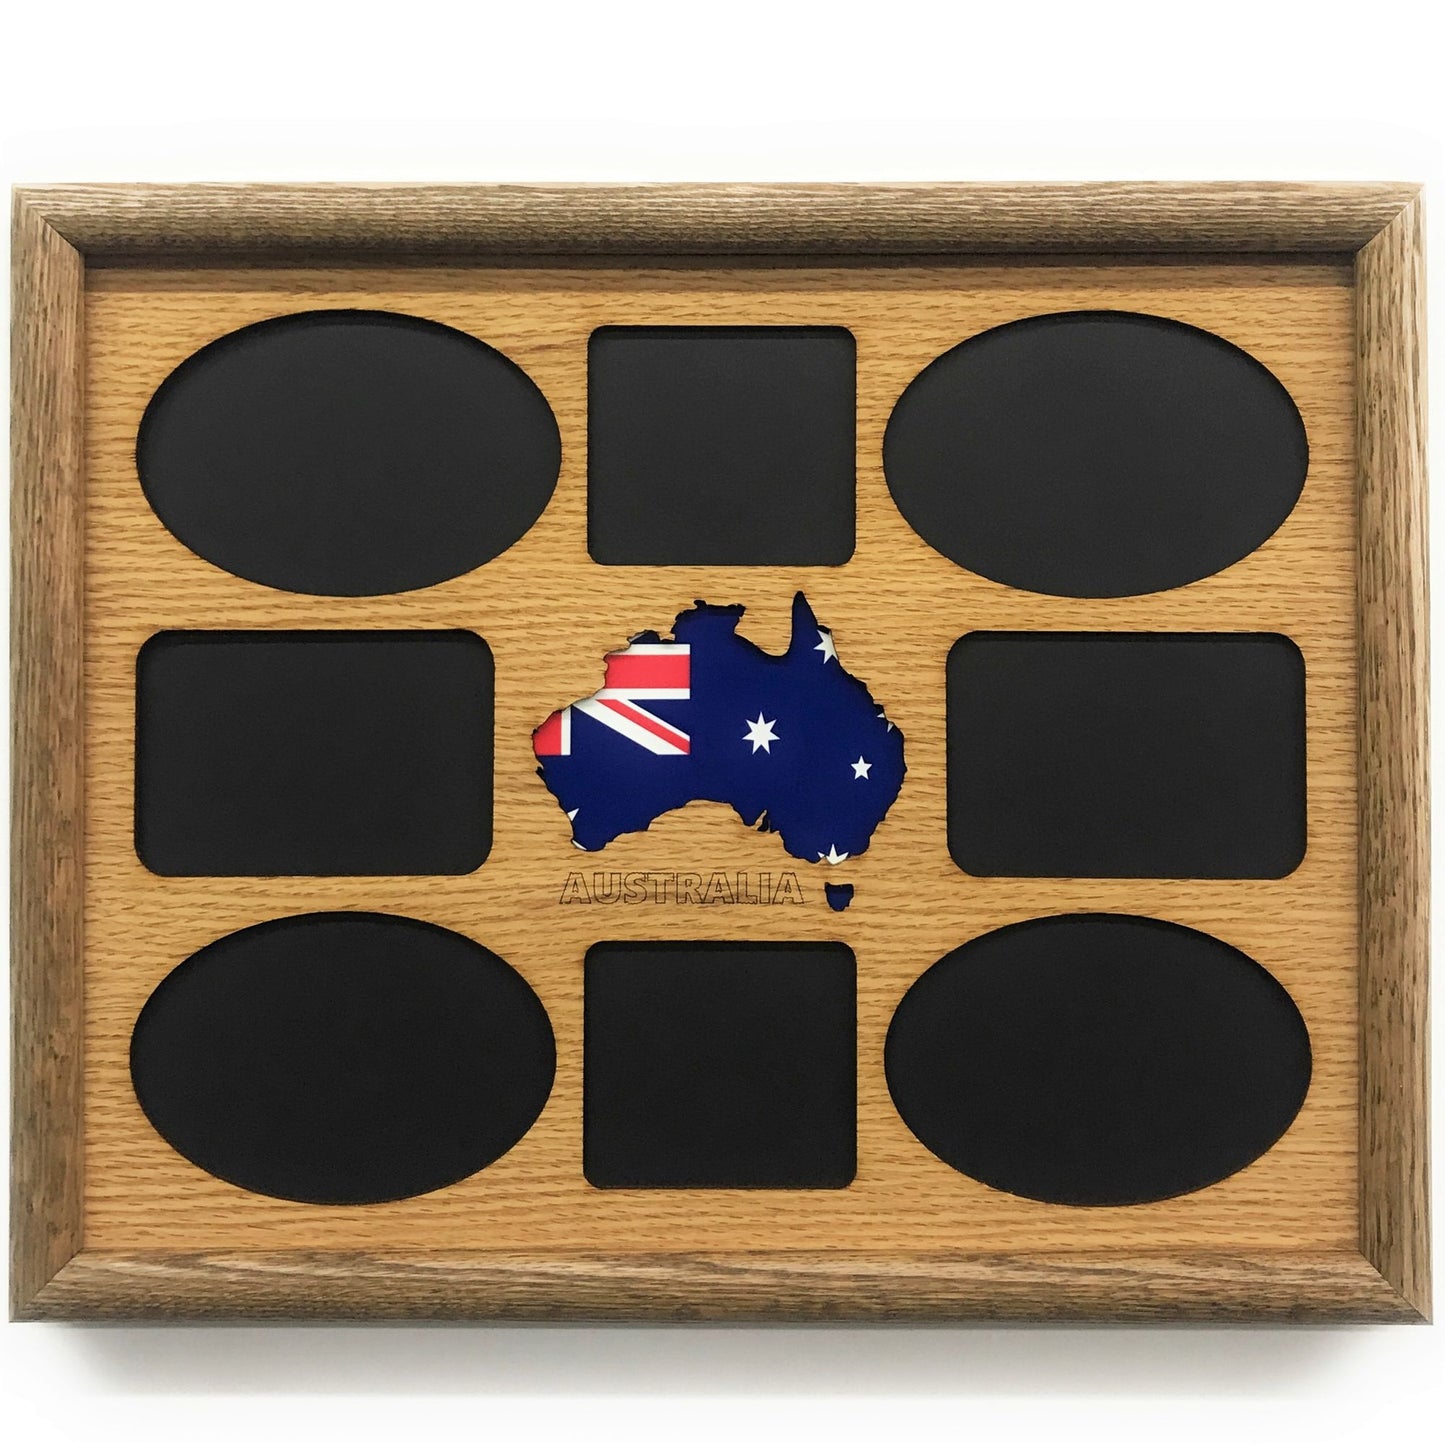 Australia Picture Frame